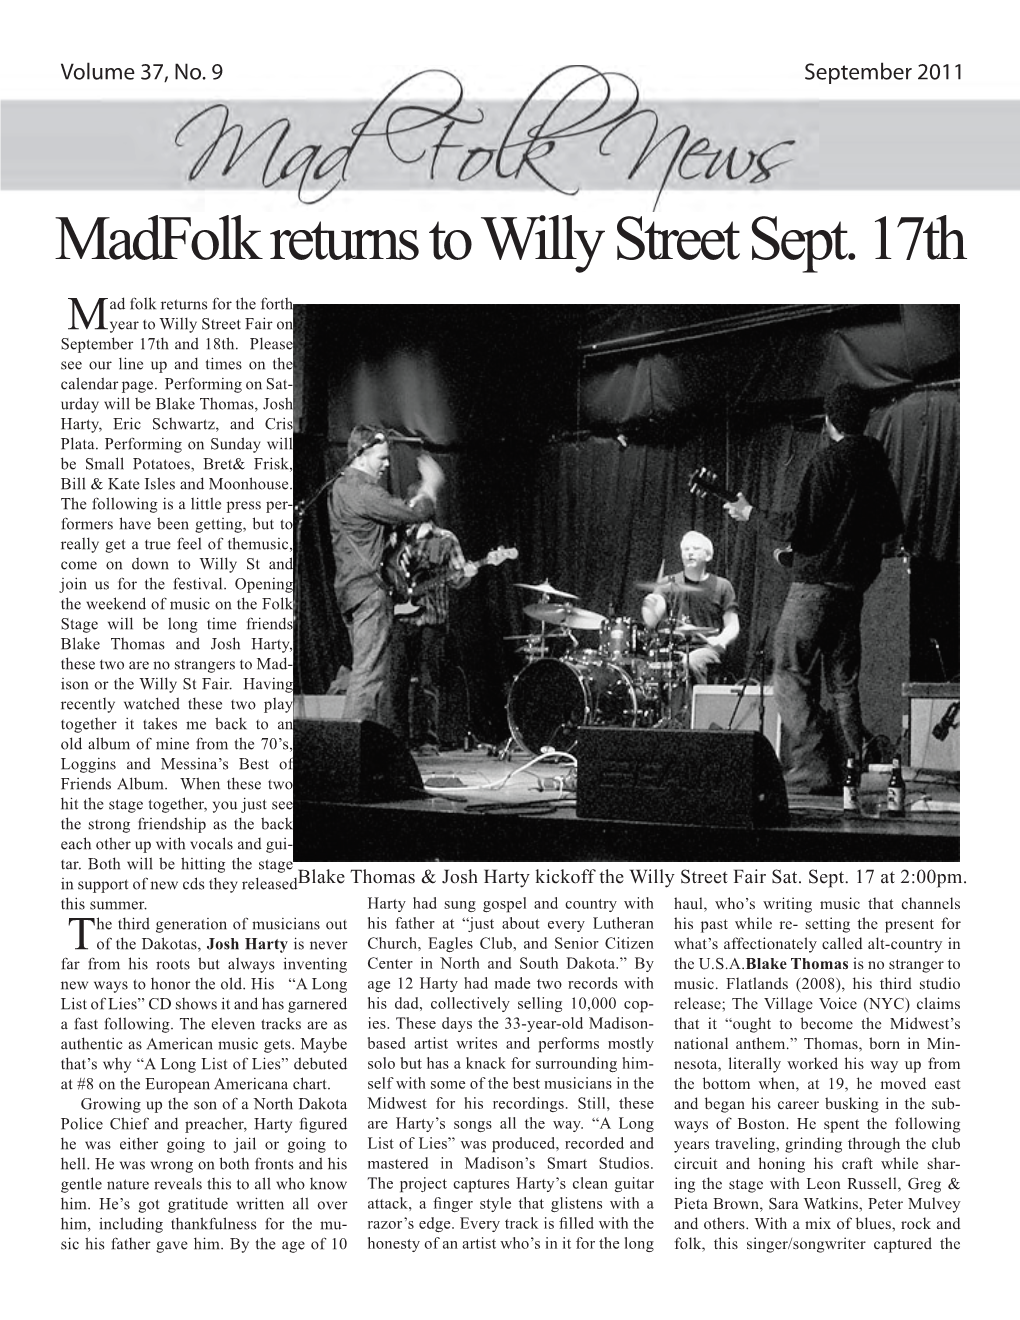 Madfolk Returns to Willy Street Sept. 17Th